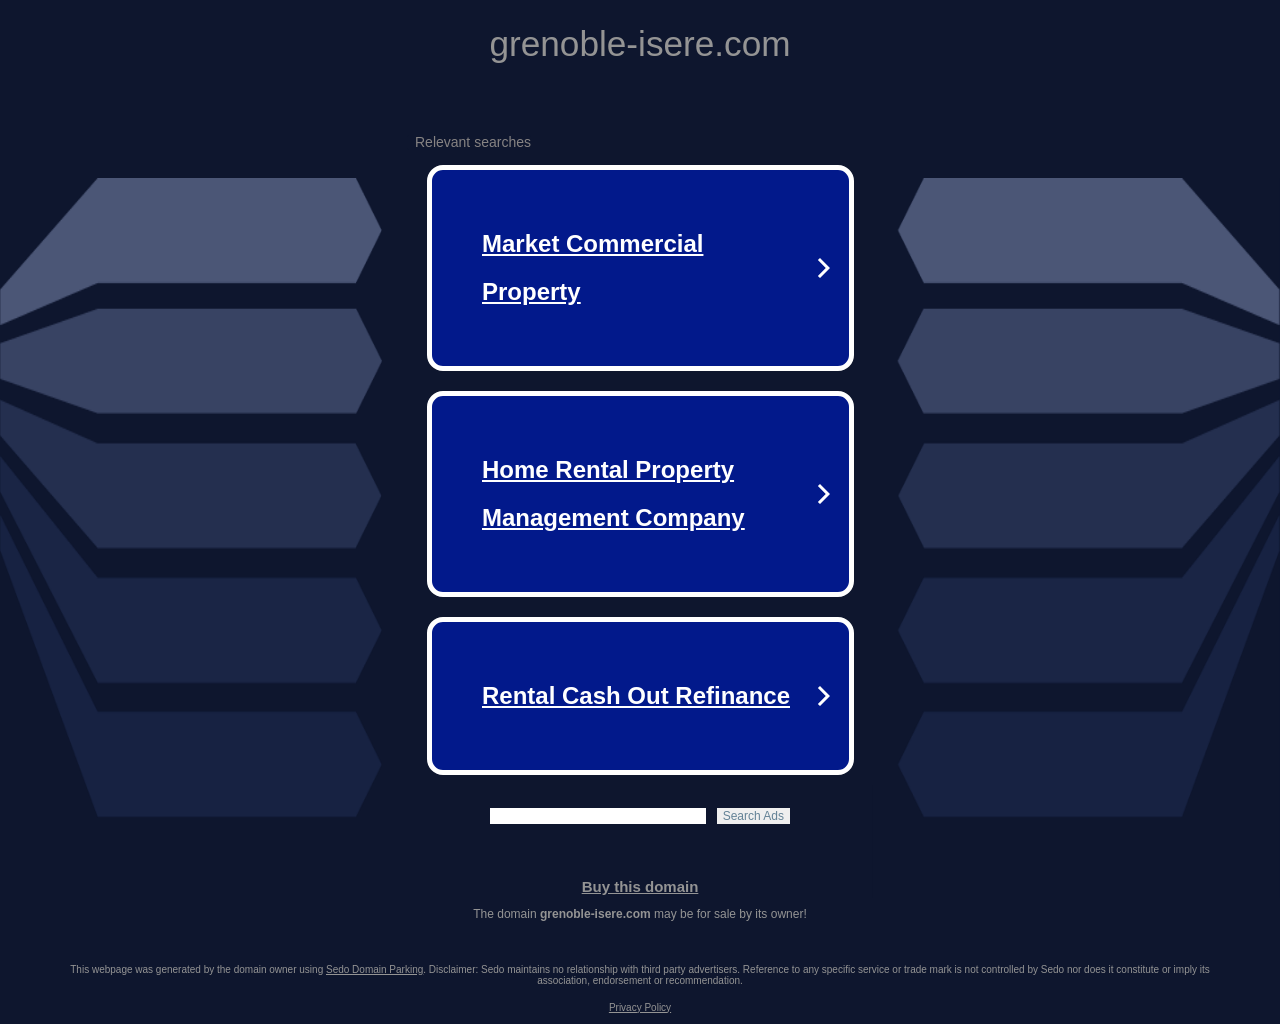 grenoble-isere.com